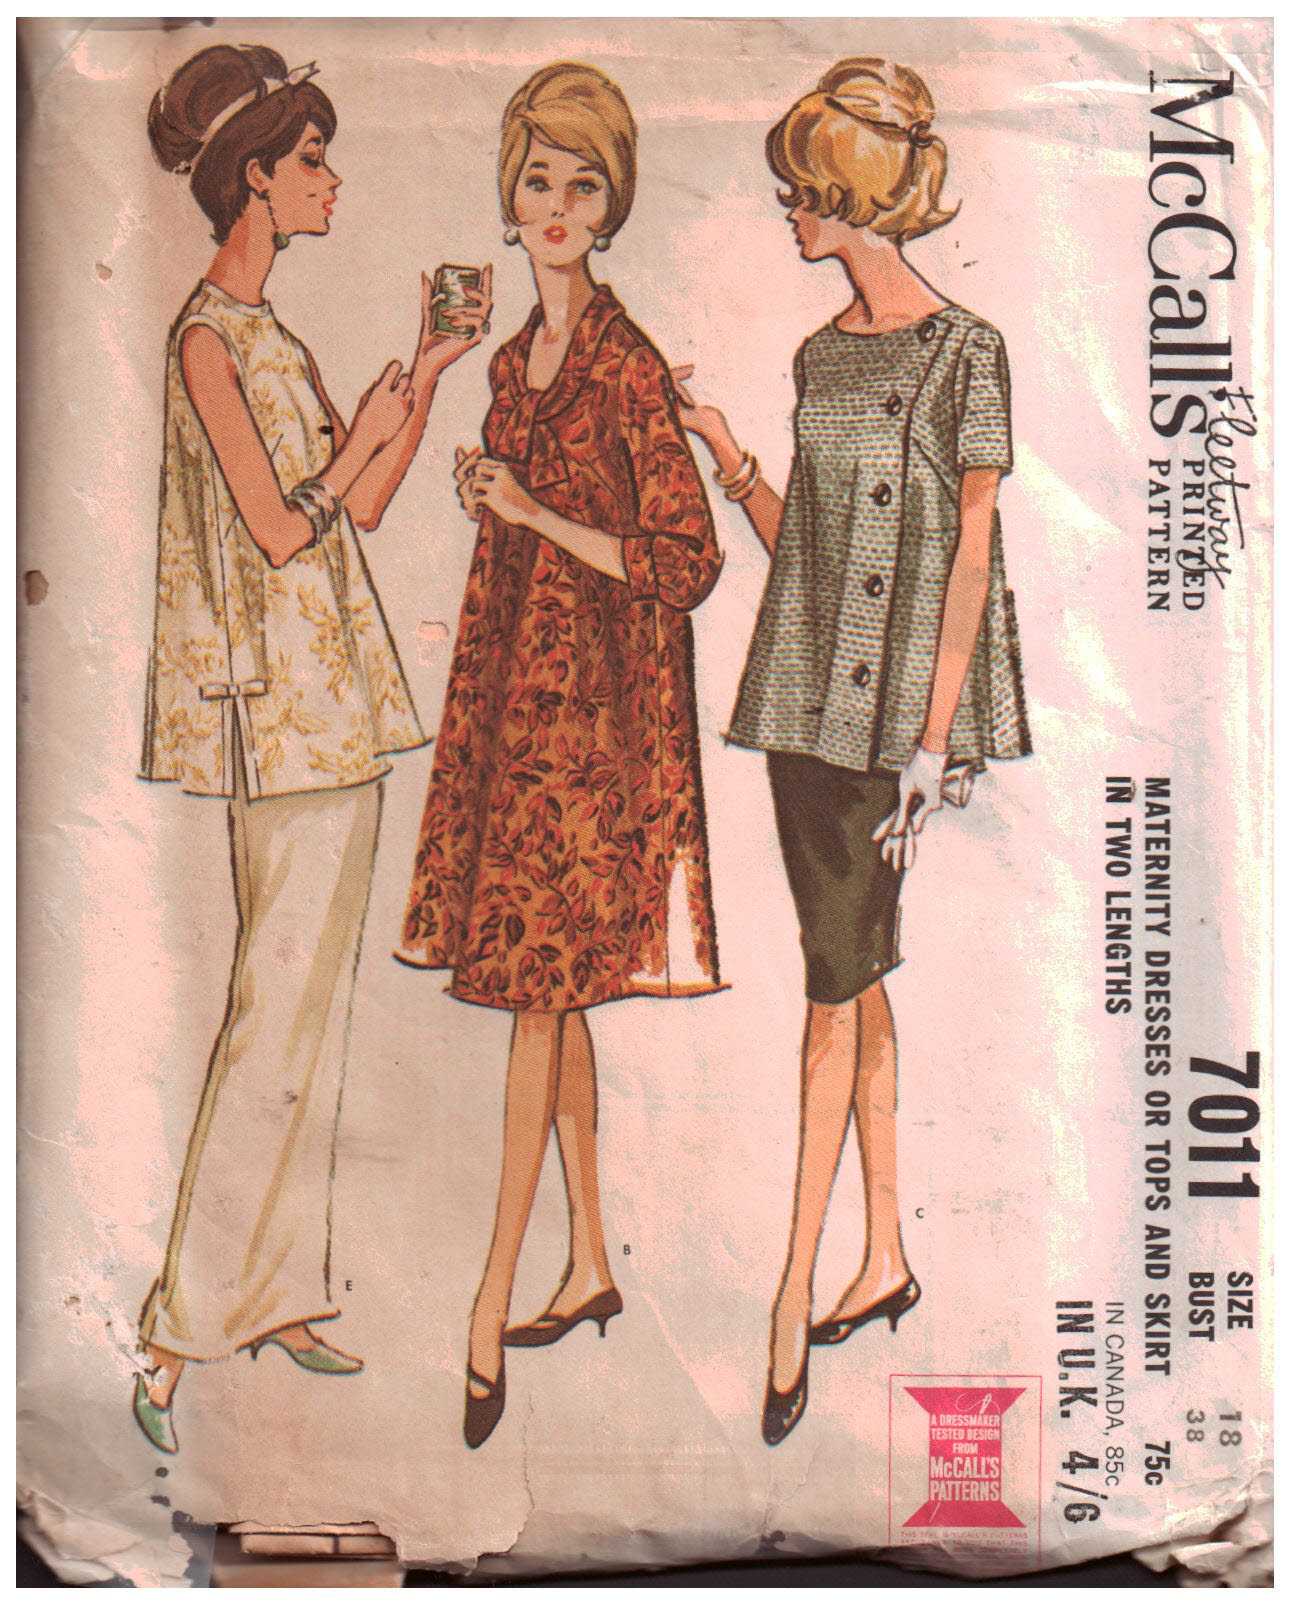 S-M-L/ Maternity Skirt High-waisted Bodycon Jersey/ Digital Sewing  Pdf-pattern for Women mc2patterns Mc2-6001 -  Canada